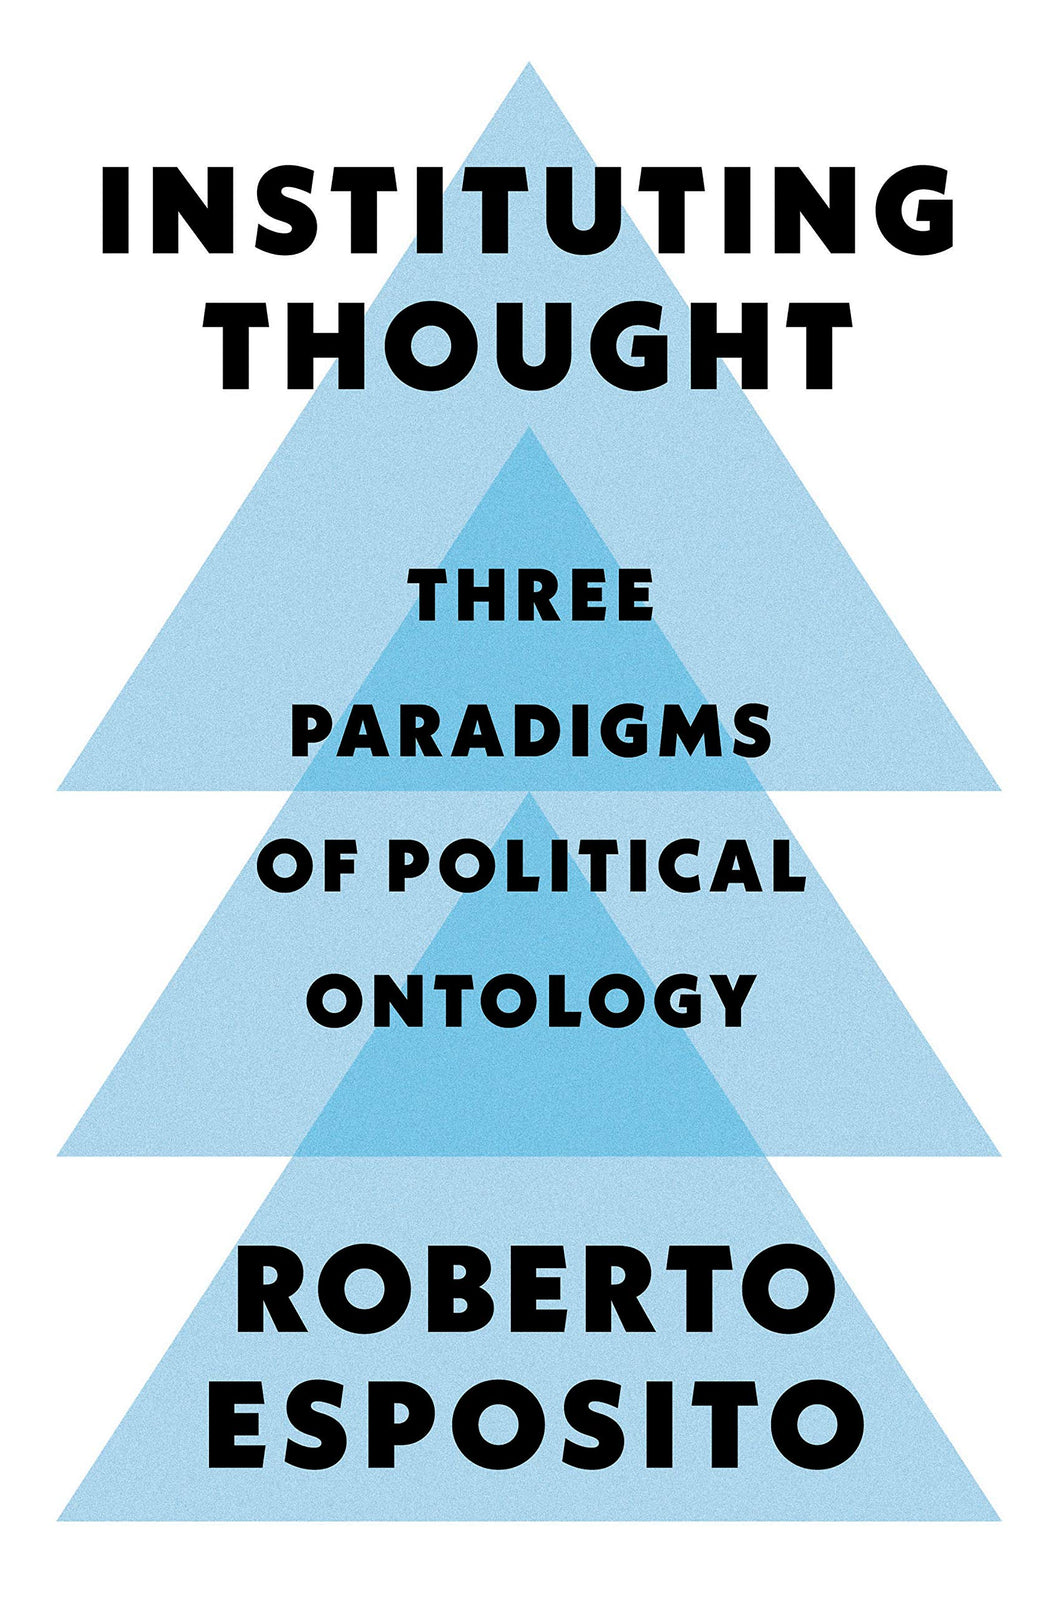 Instituting Thought : Three Paradigms of Political Ontology ร้านหนังสือและสิ่งของ เป็นร้านหนังสือภาษาอังกฤษหายาก และร้านกาแฟ หรือ บุ๊คคาเฟ่ ตั้งอยู่สุขุมวิท กรุงเทพ